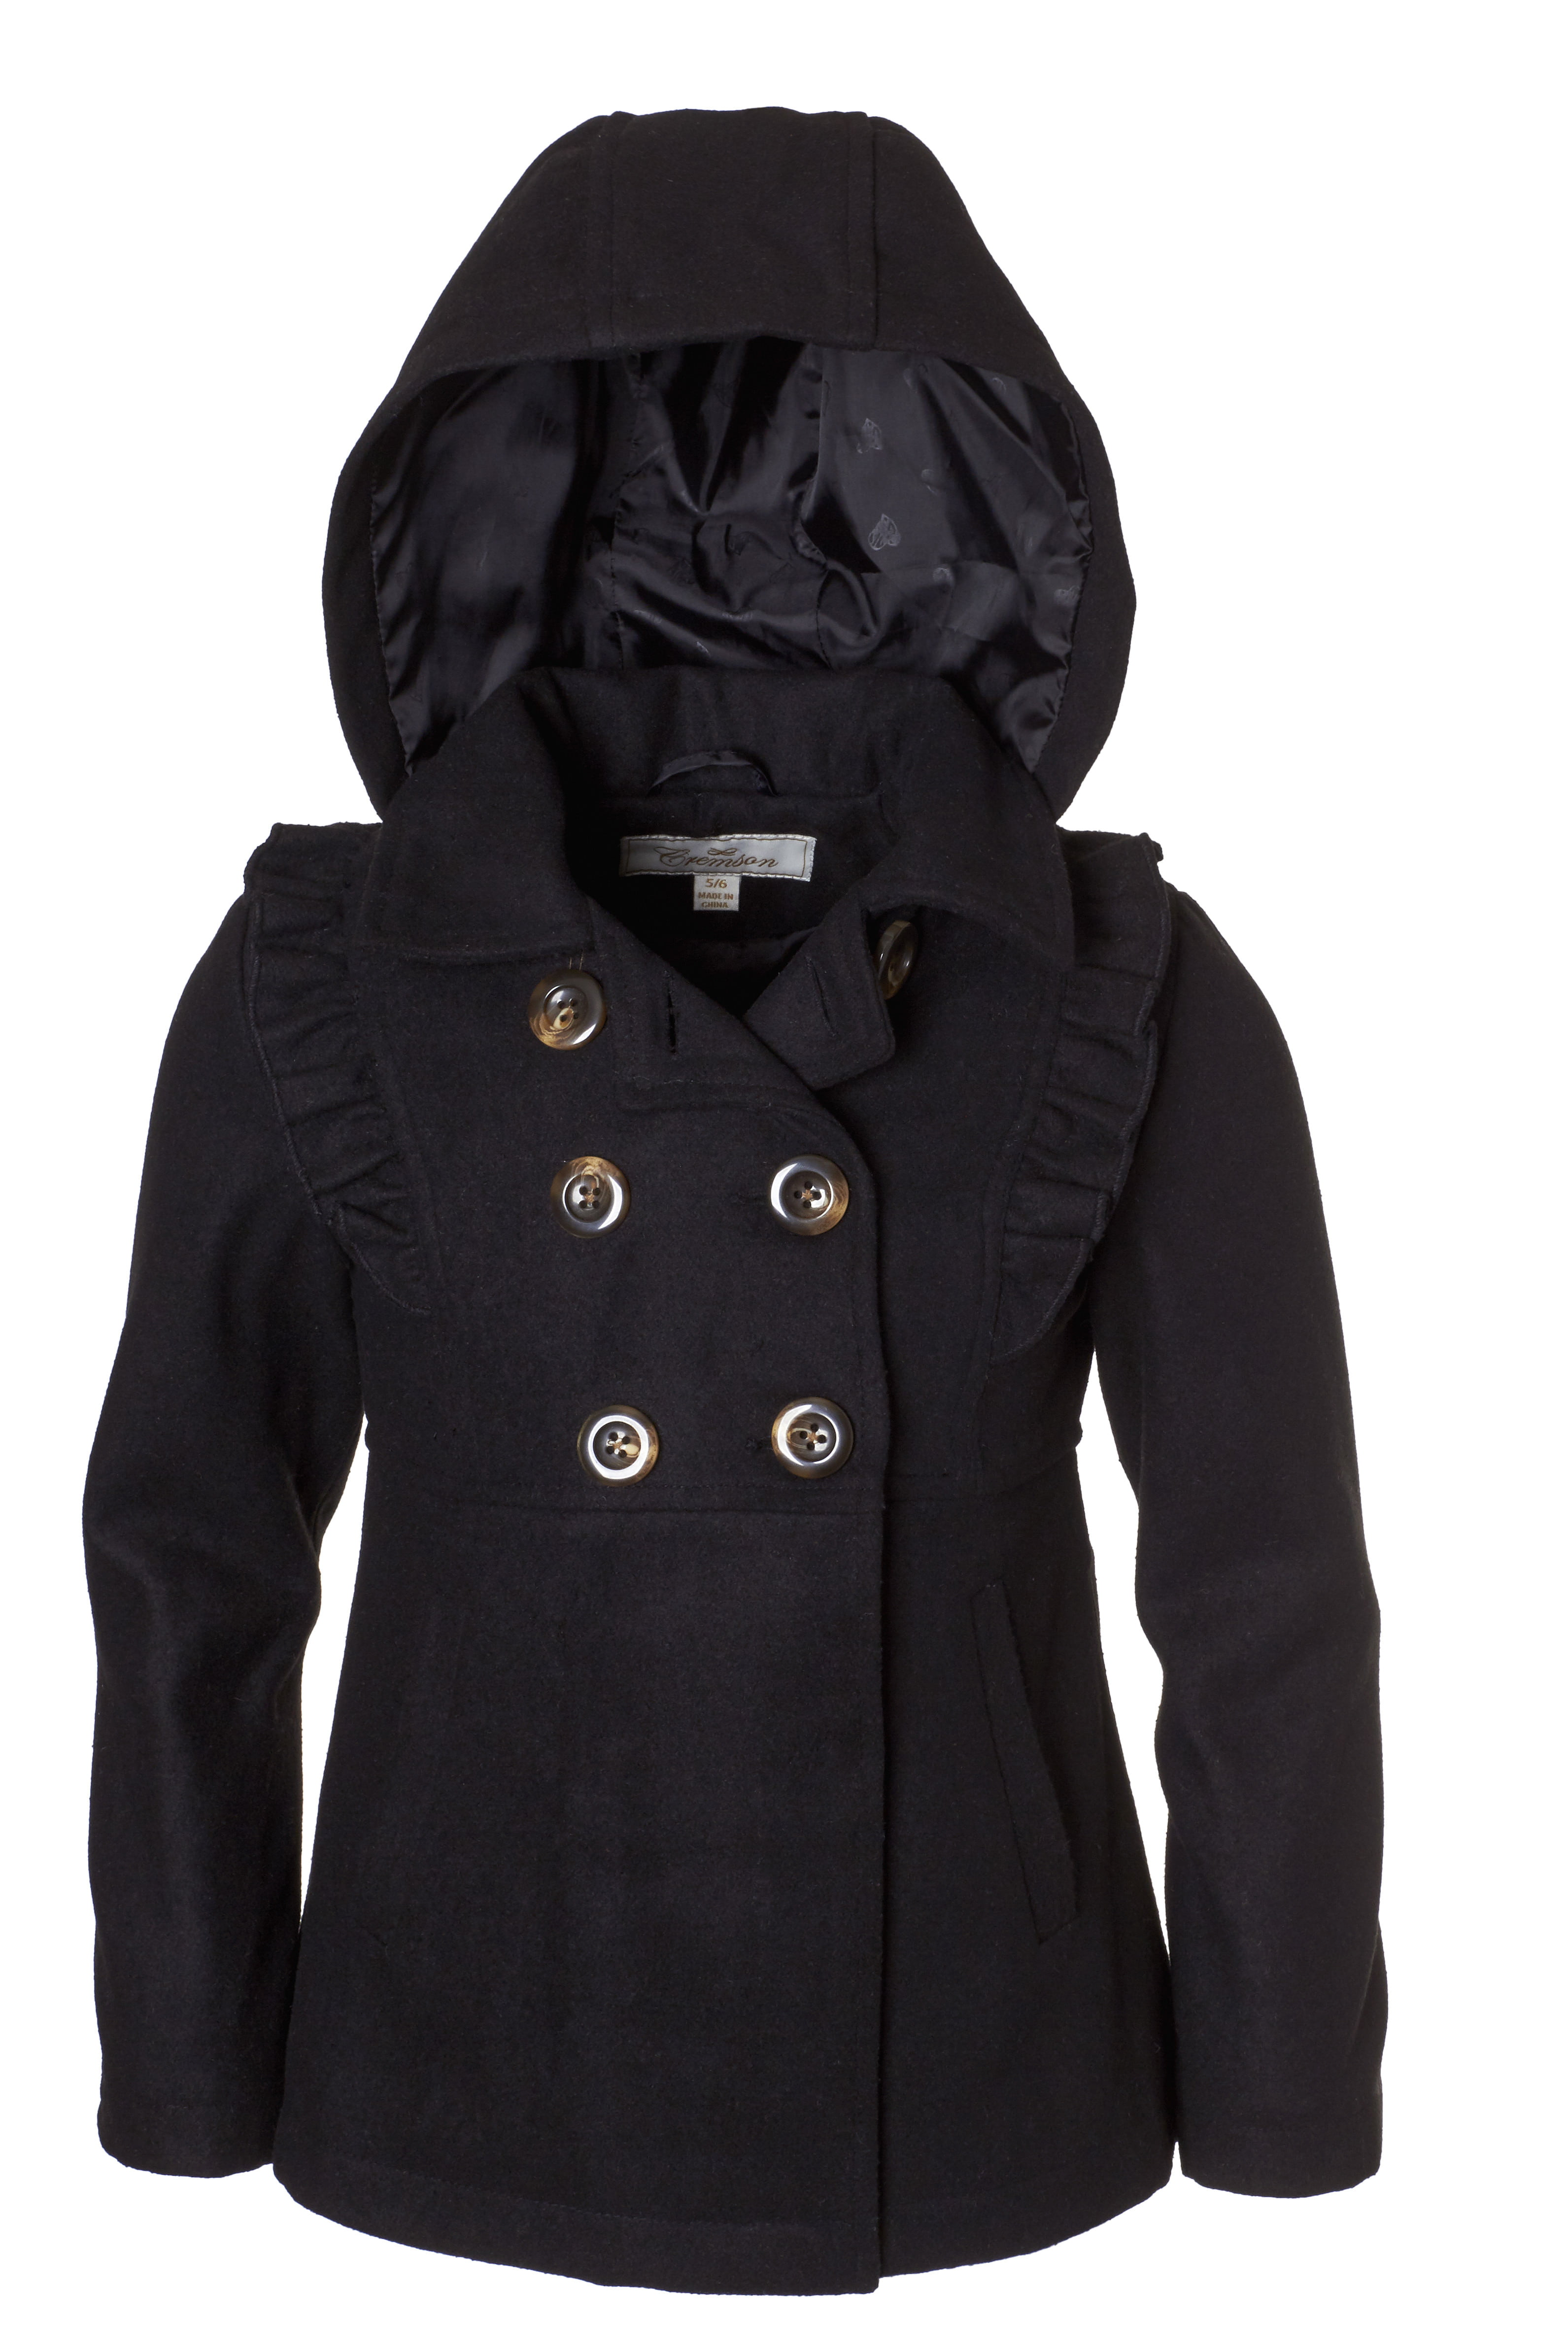 Cremson Girls' Wool Blend Hooded Ruffle Winter Dress Pea Coat Jacket